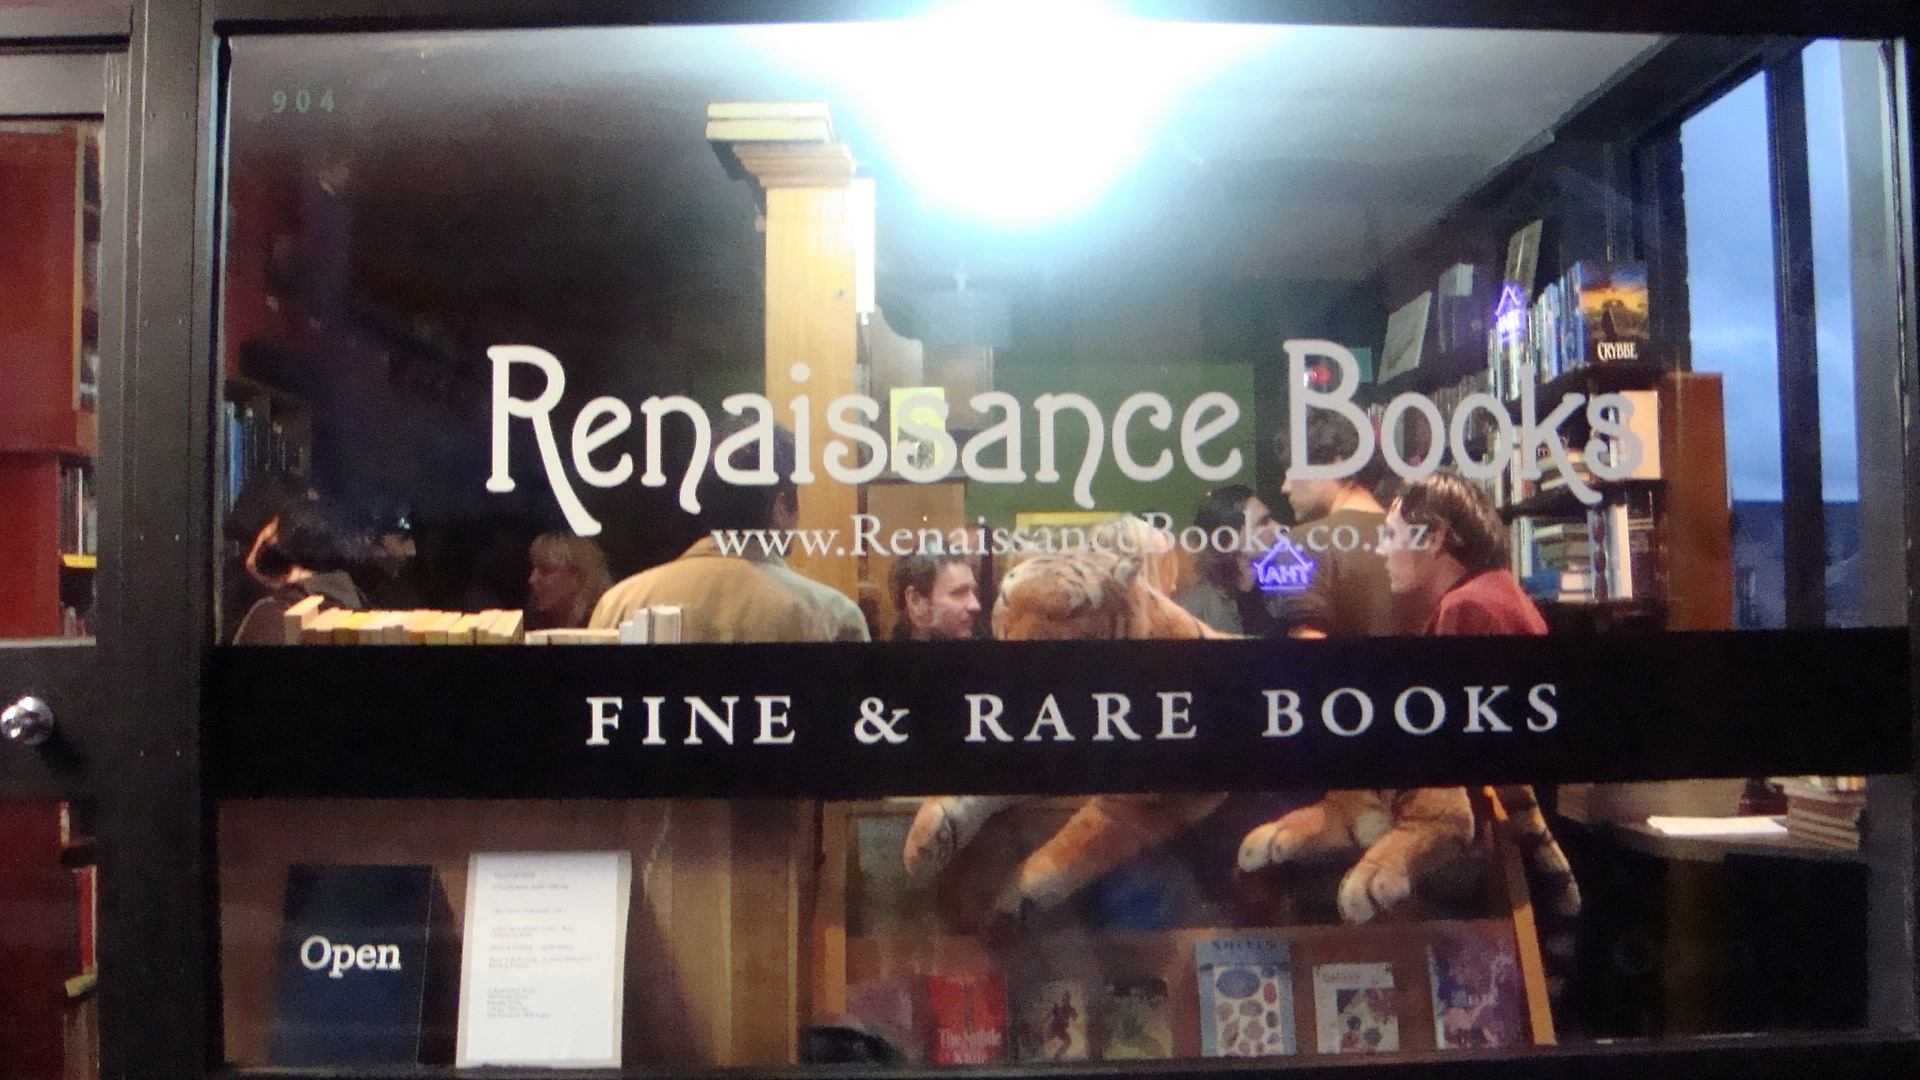 Picture of Renaissance Books' storefront